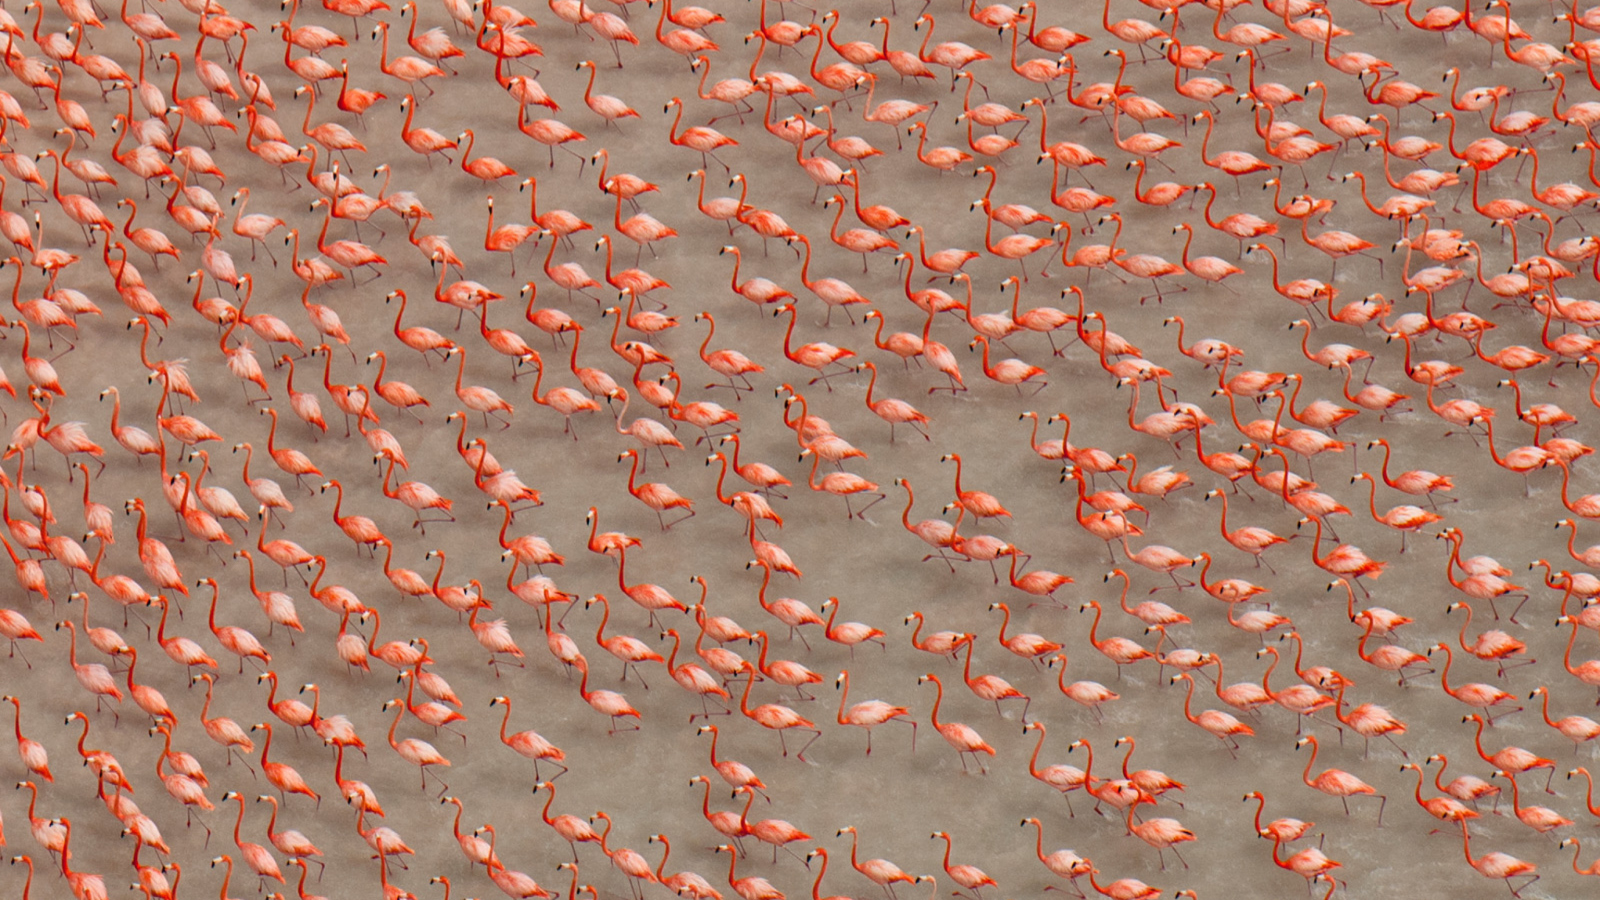 Обои Pink Flamingos 1600x900